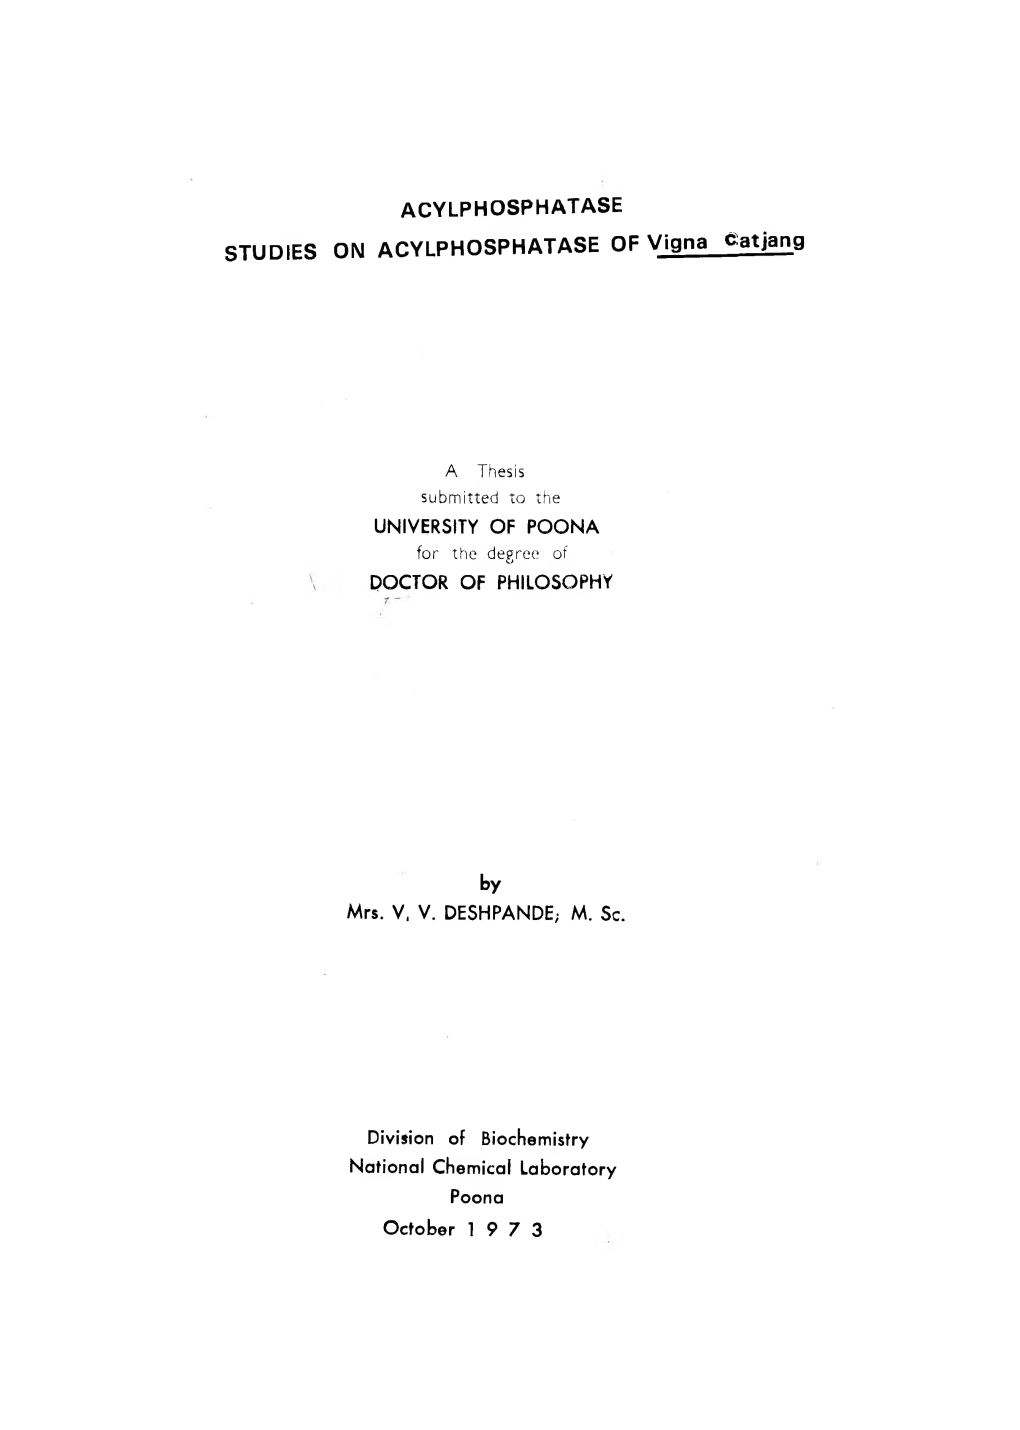 ACYLPHOSPHATASE STUDIES on ACYLPHOSPHATASE of Vigna Catjang